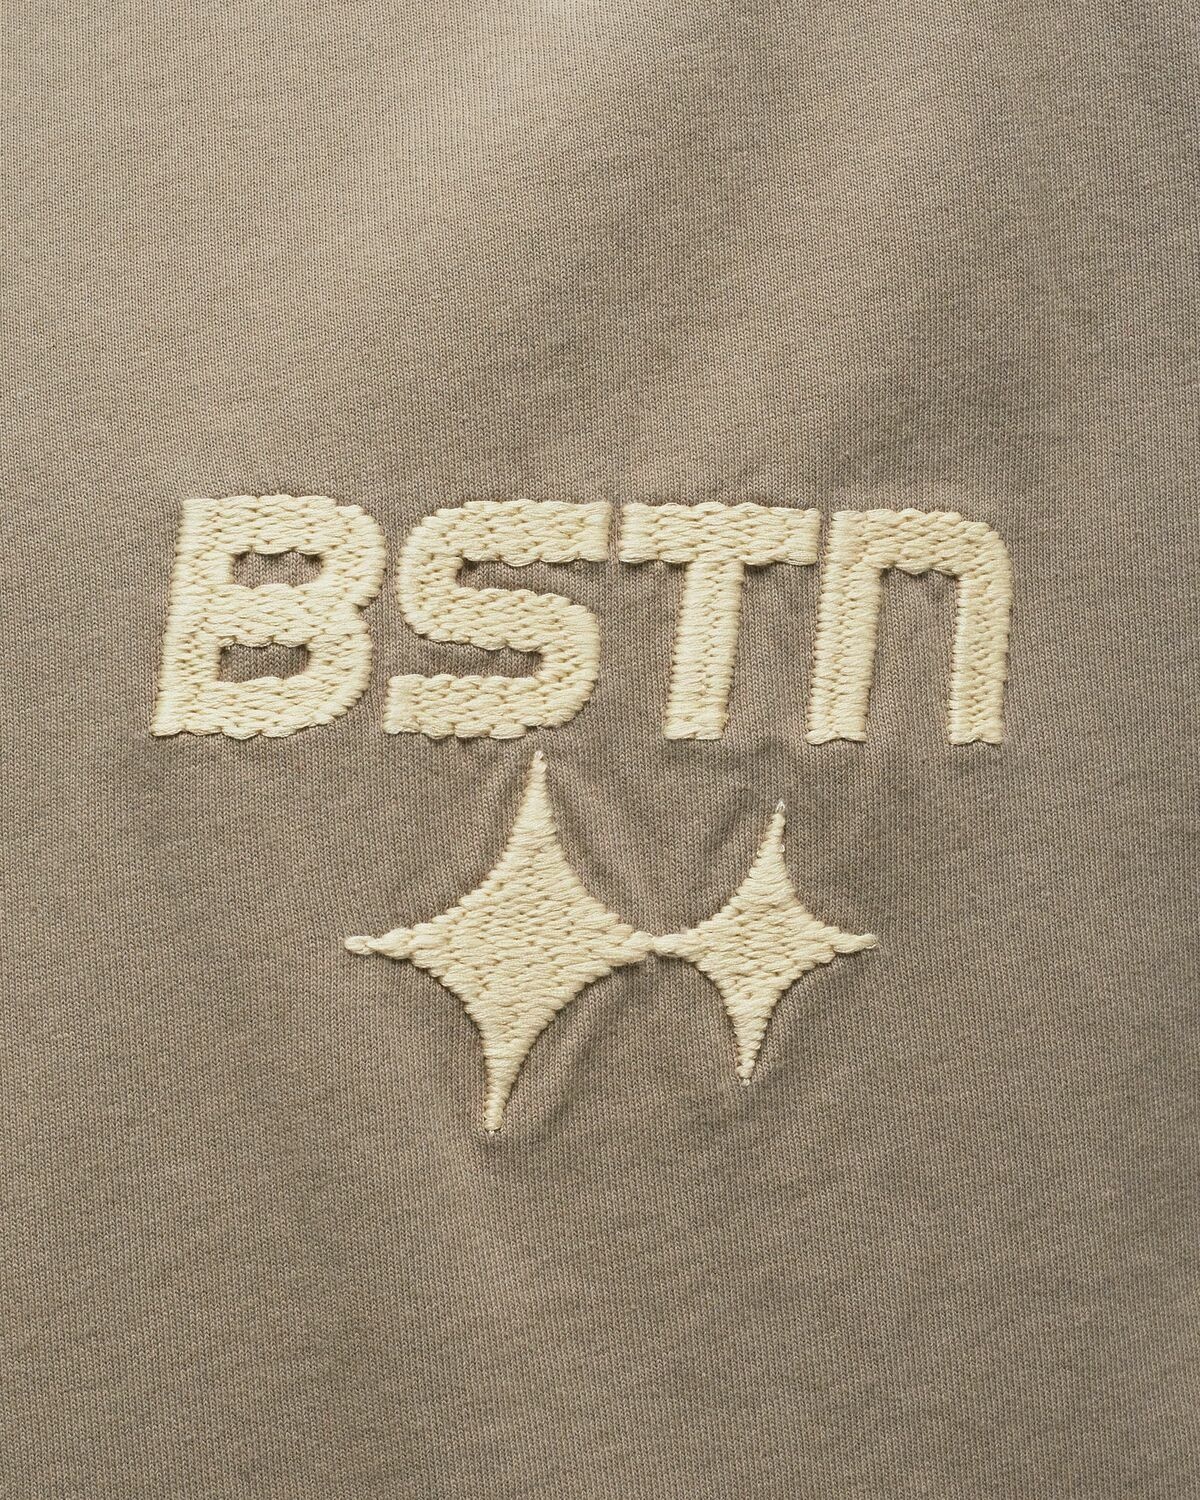 Bstn Brand Signature Stitching Logo Heavyweight Tee Brown - Mens - Shortsleeves